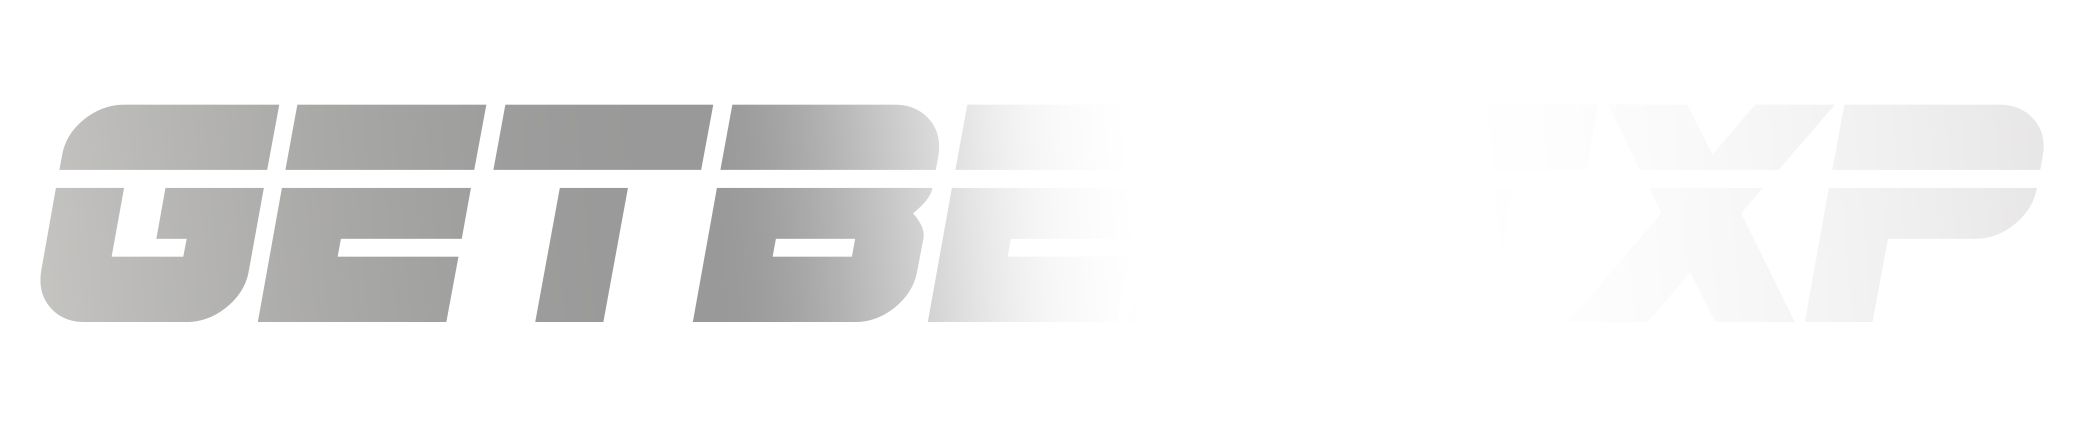 Getbeatxp